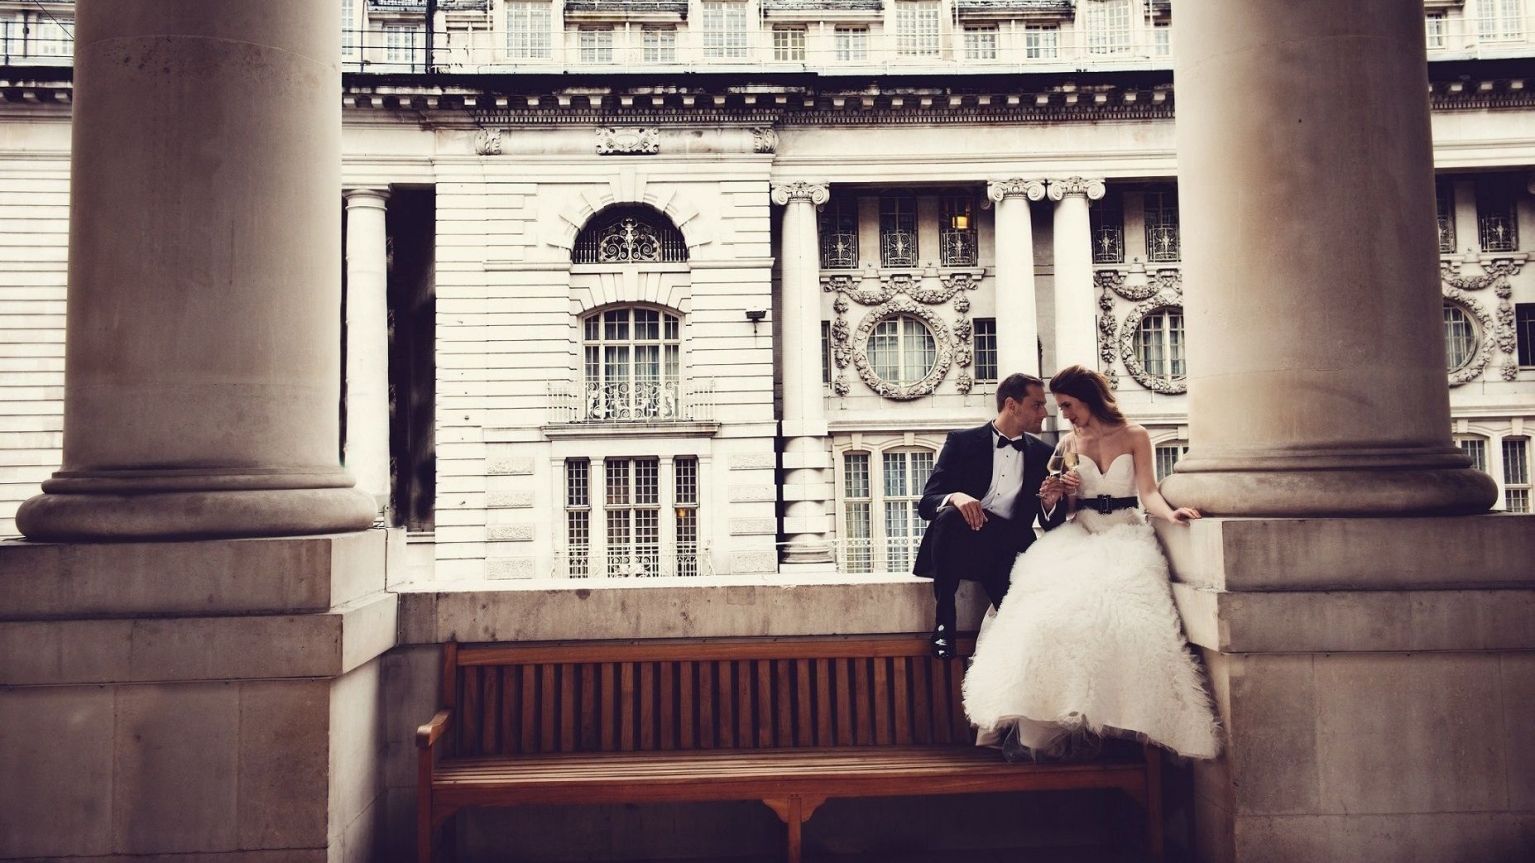 weddings at hotel cafe royal regent street london